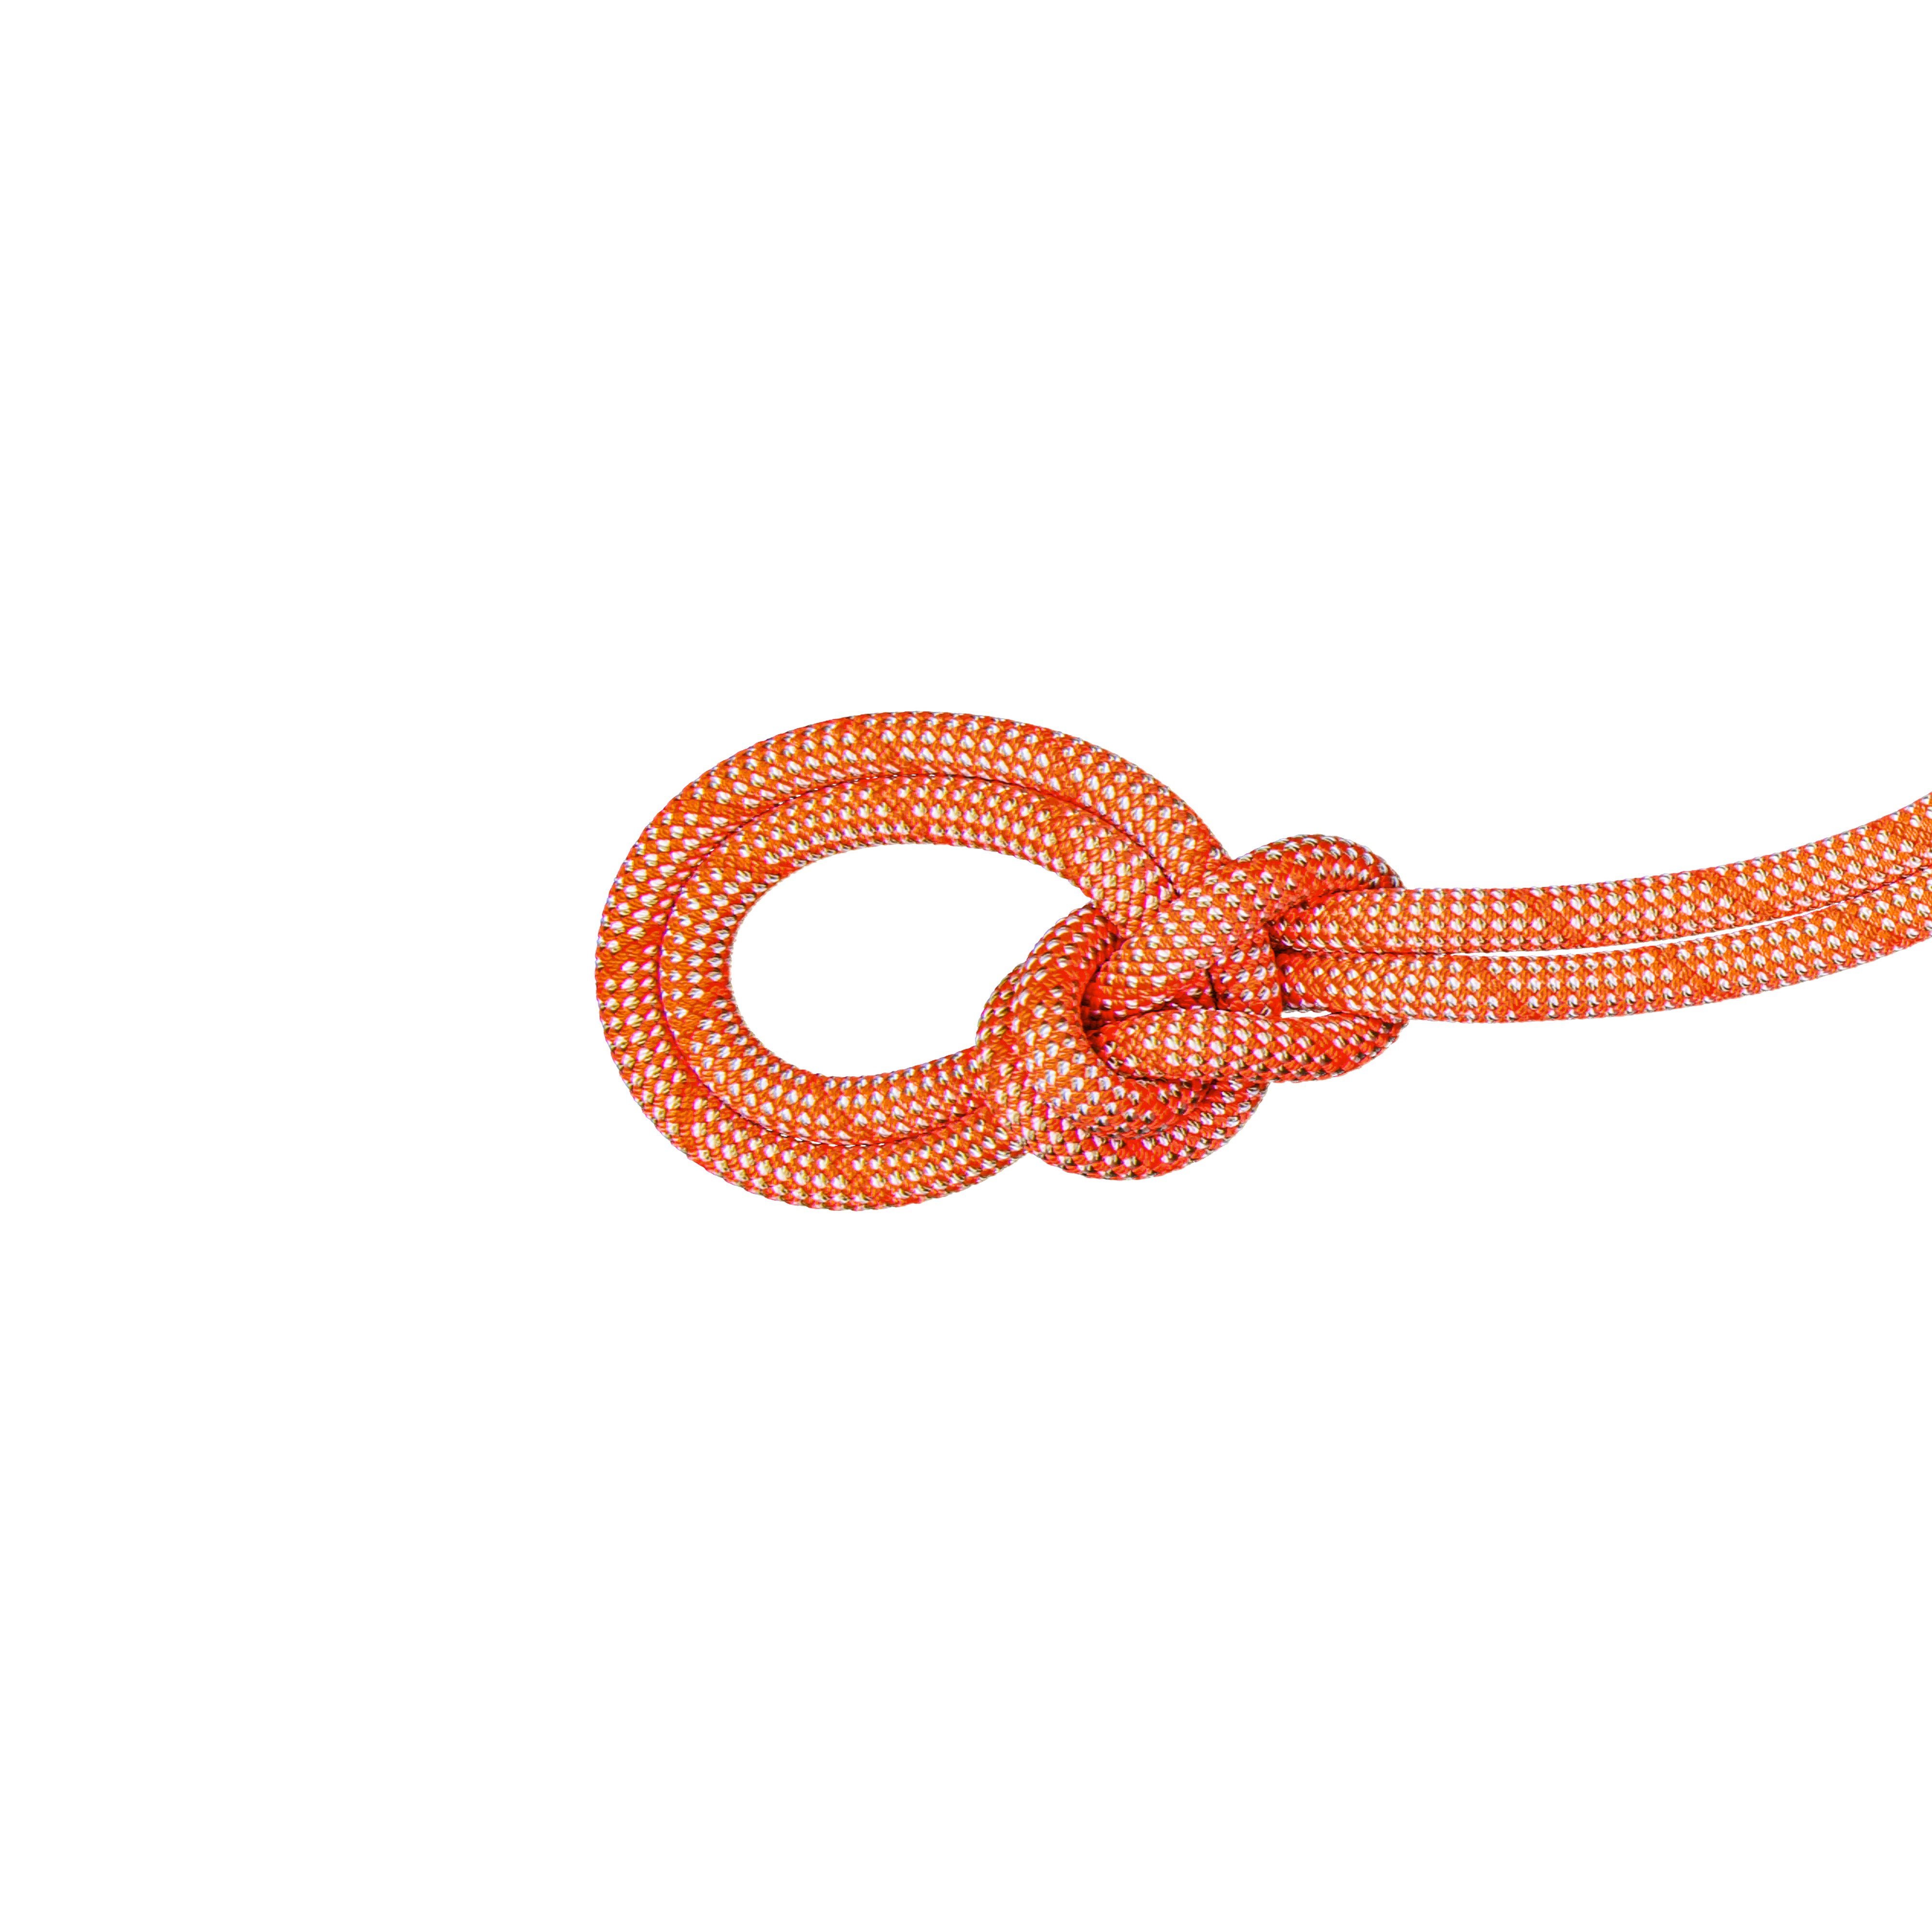 9.8 Crag Classic Rope - Classic Standard, orange-white, 50 m thumbnail